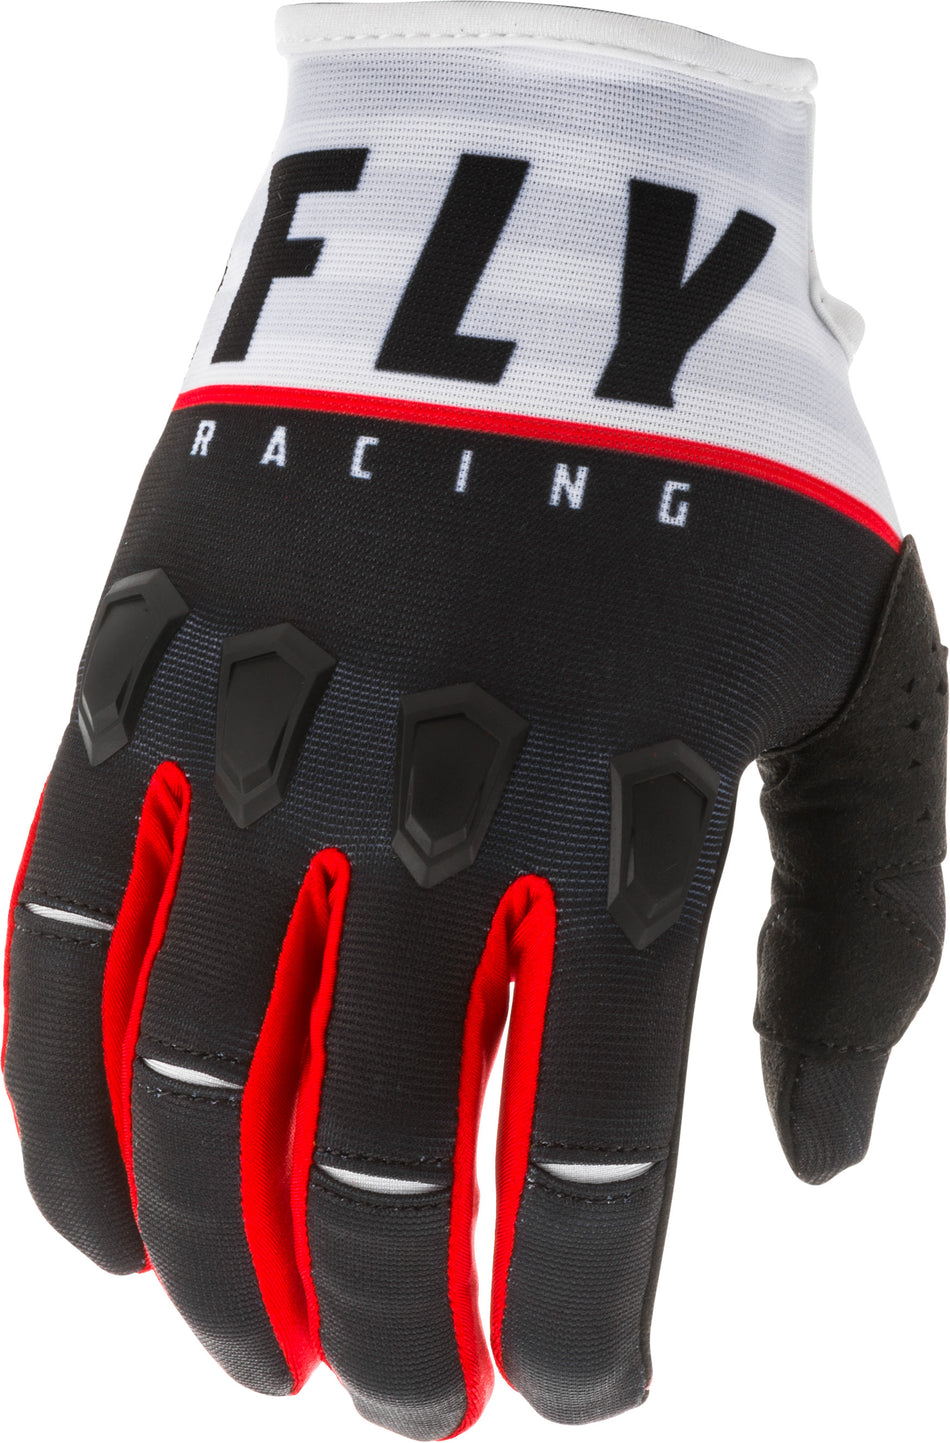 FLY RACING Kinetic K120 Gloves Black/White/Red Sz 13 373-41313